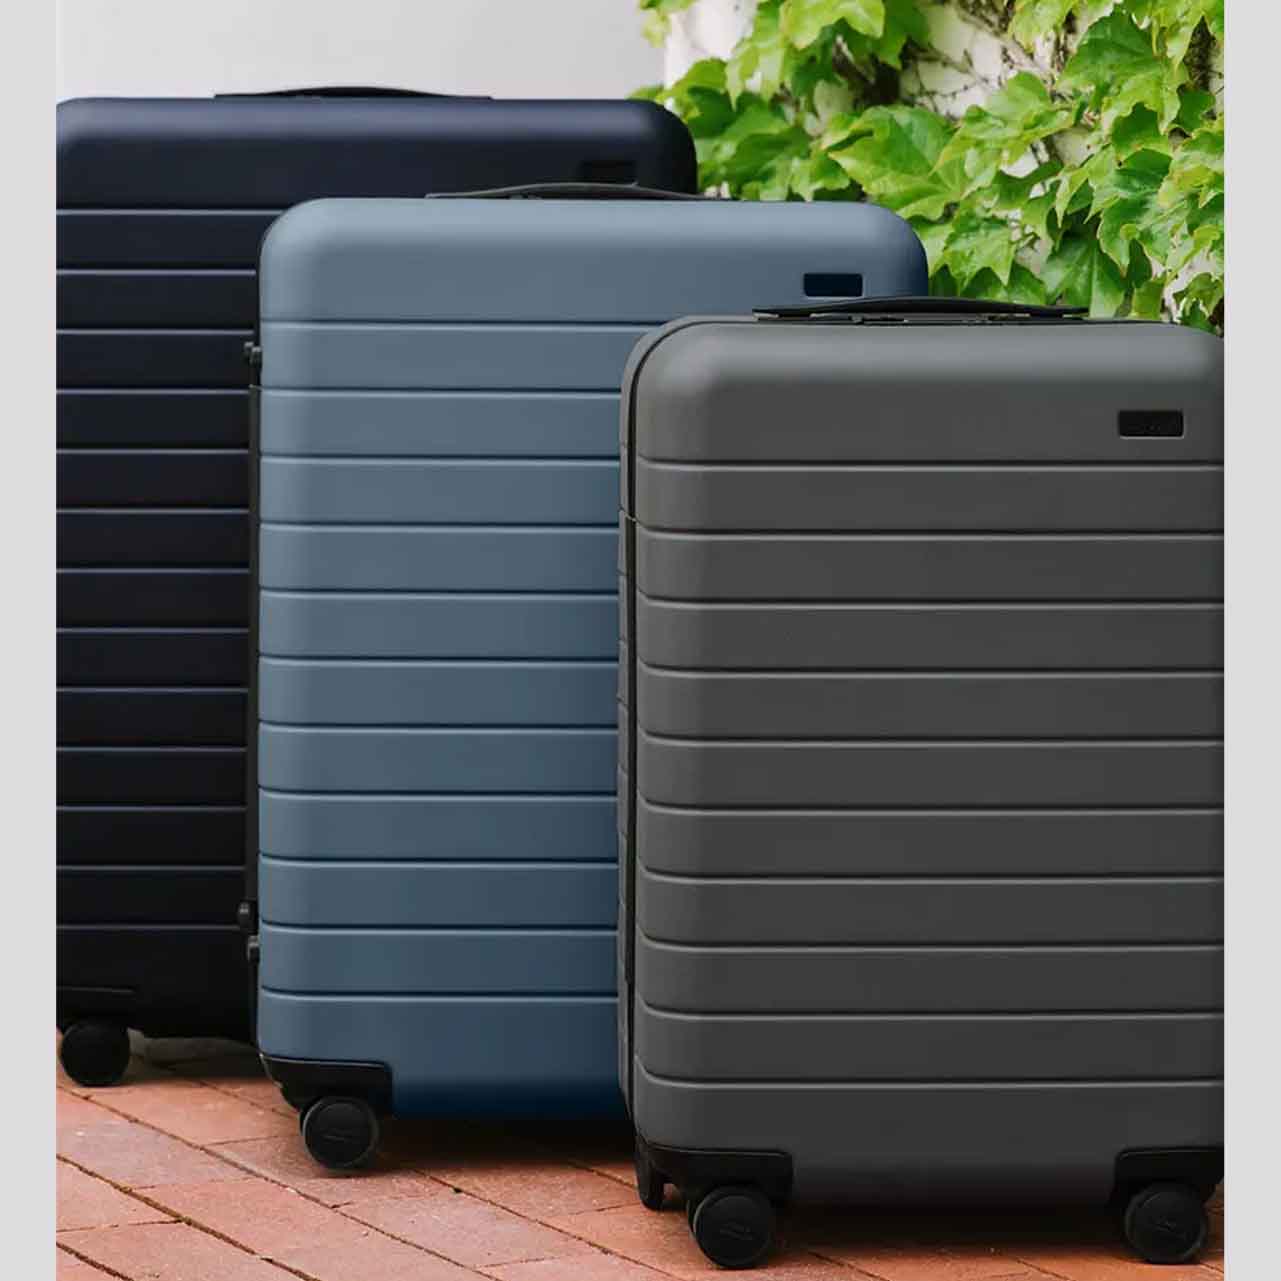 Away Luggage Set in black, blue, grey